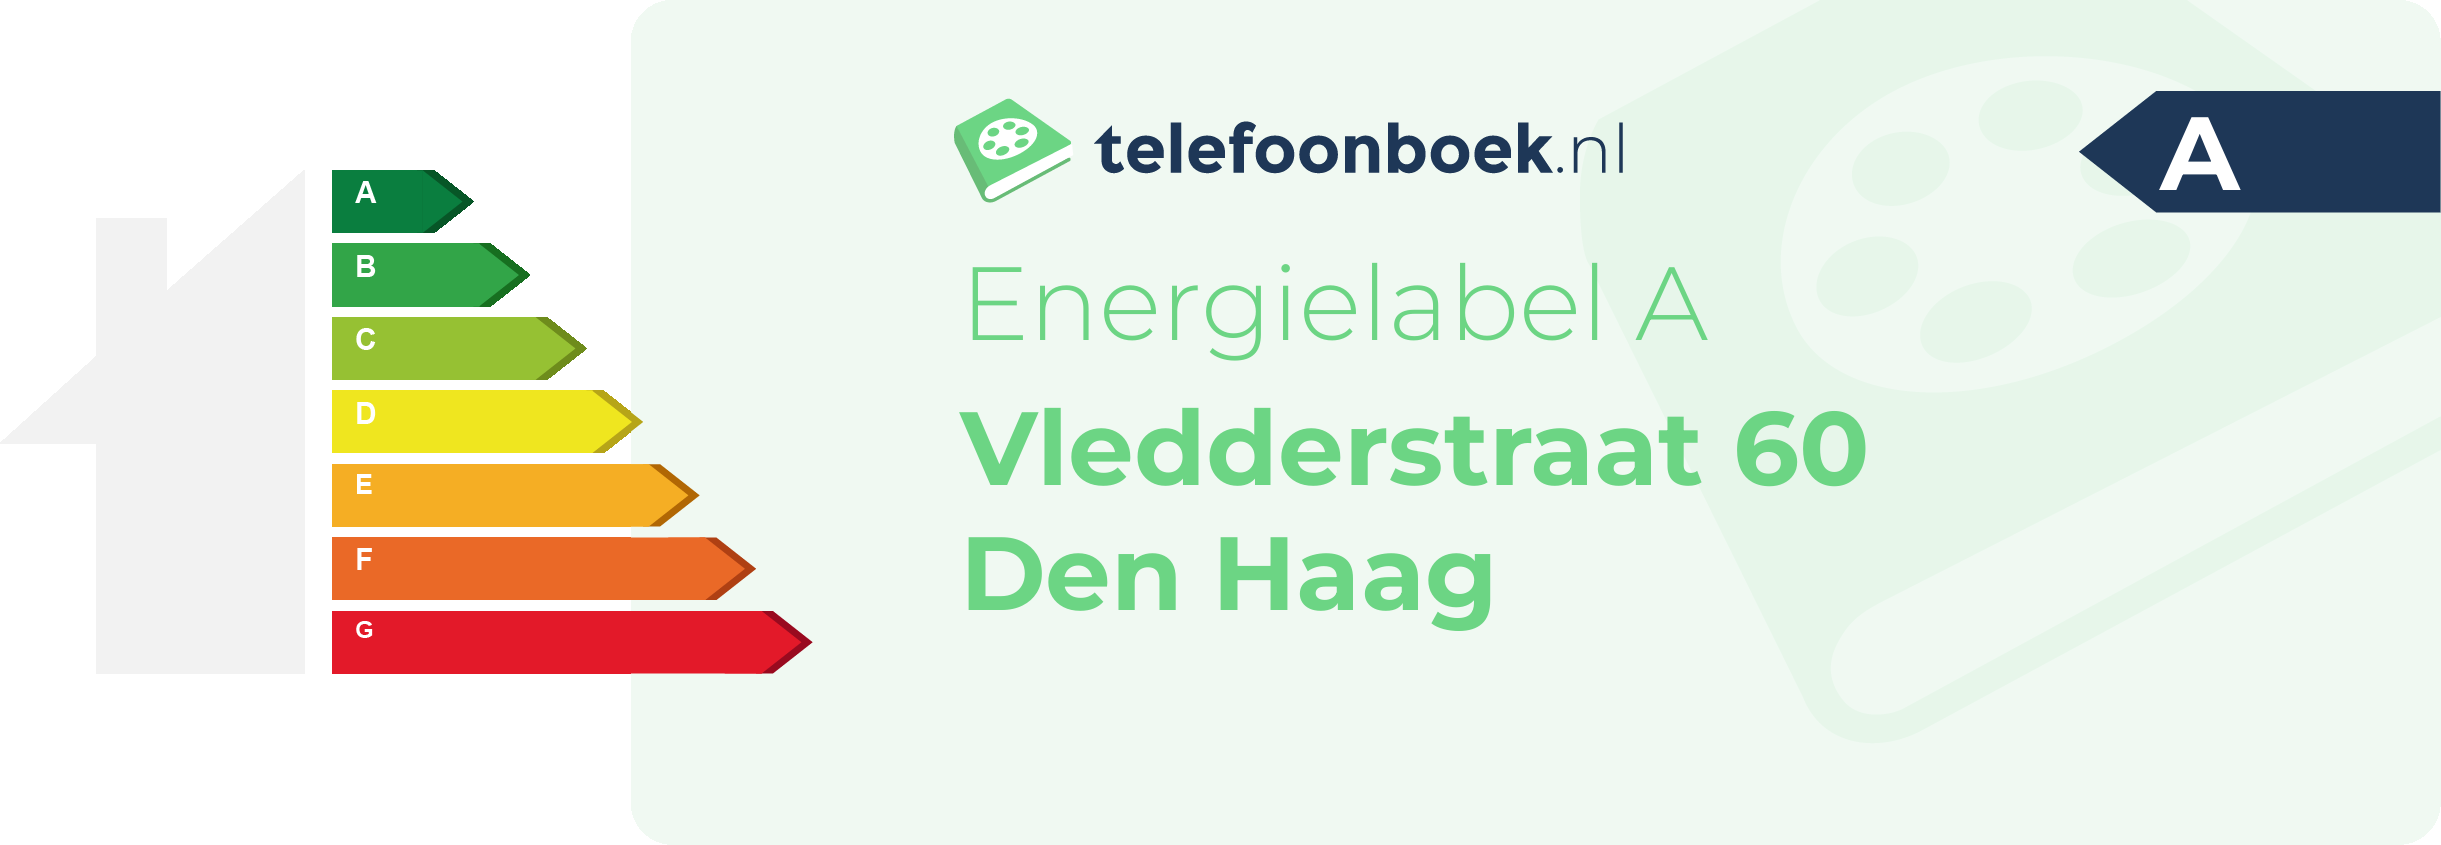 Energielabel Vledderstraat 60 Den Haag